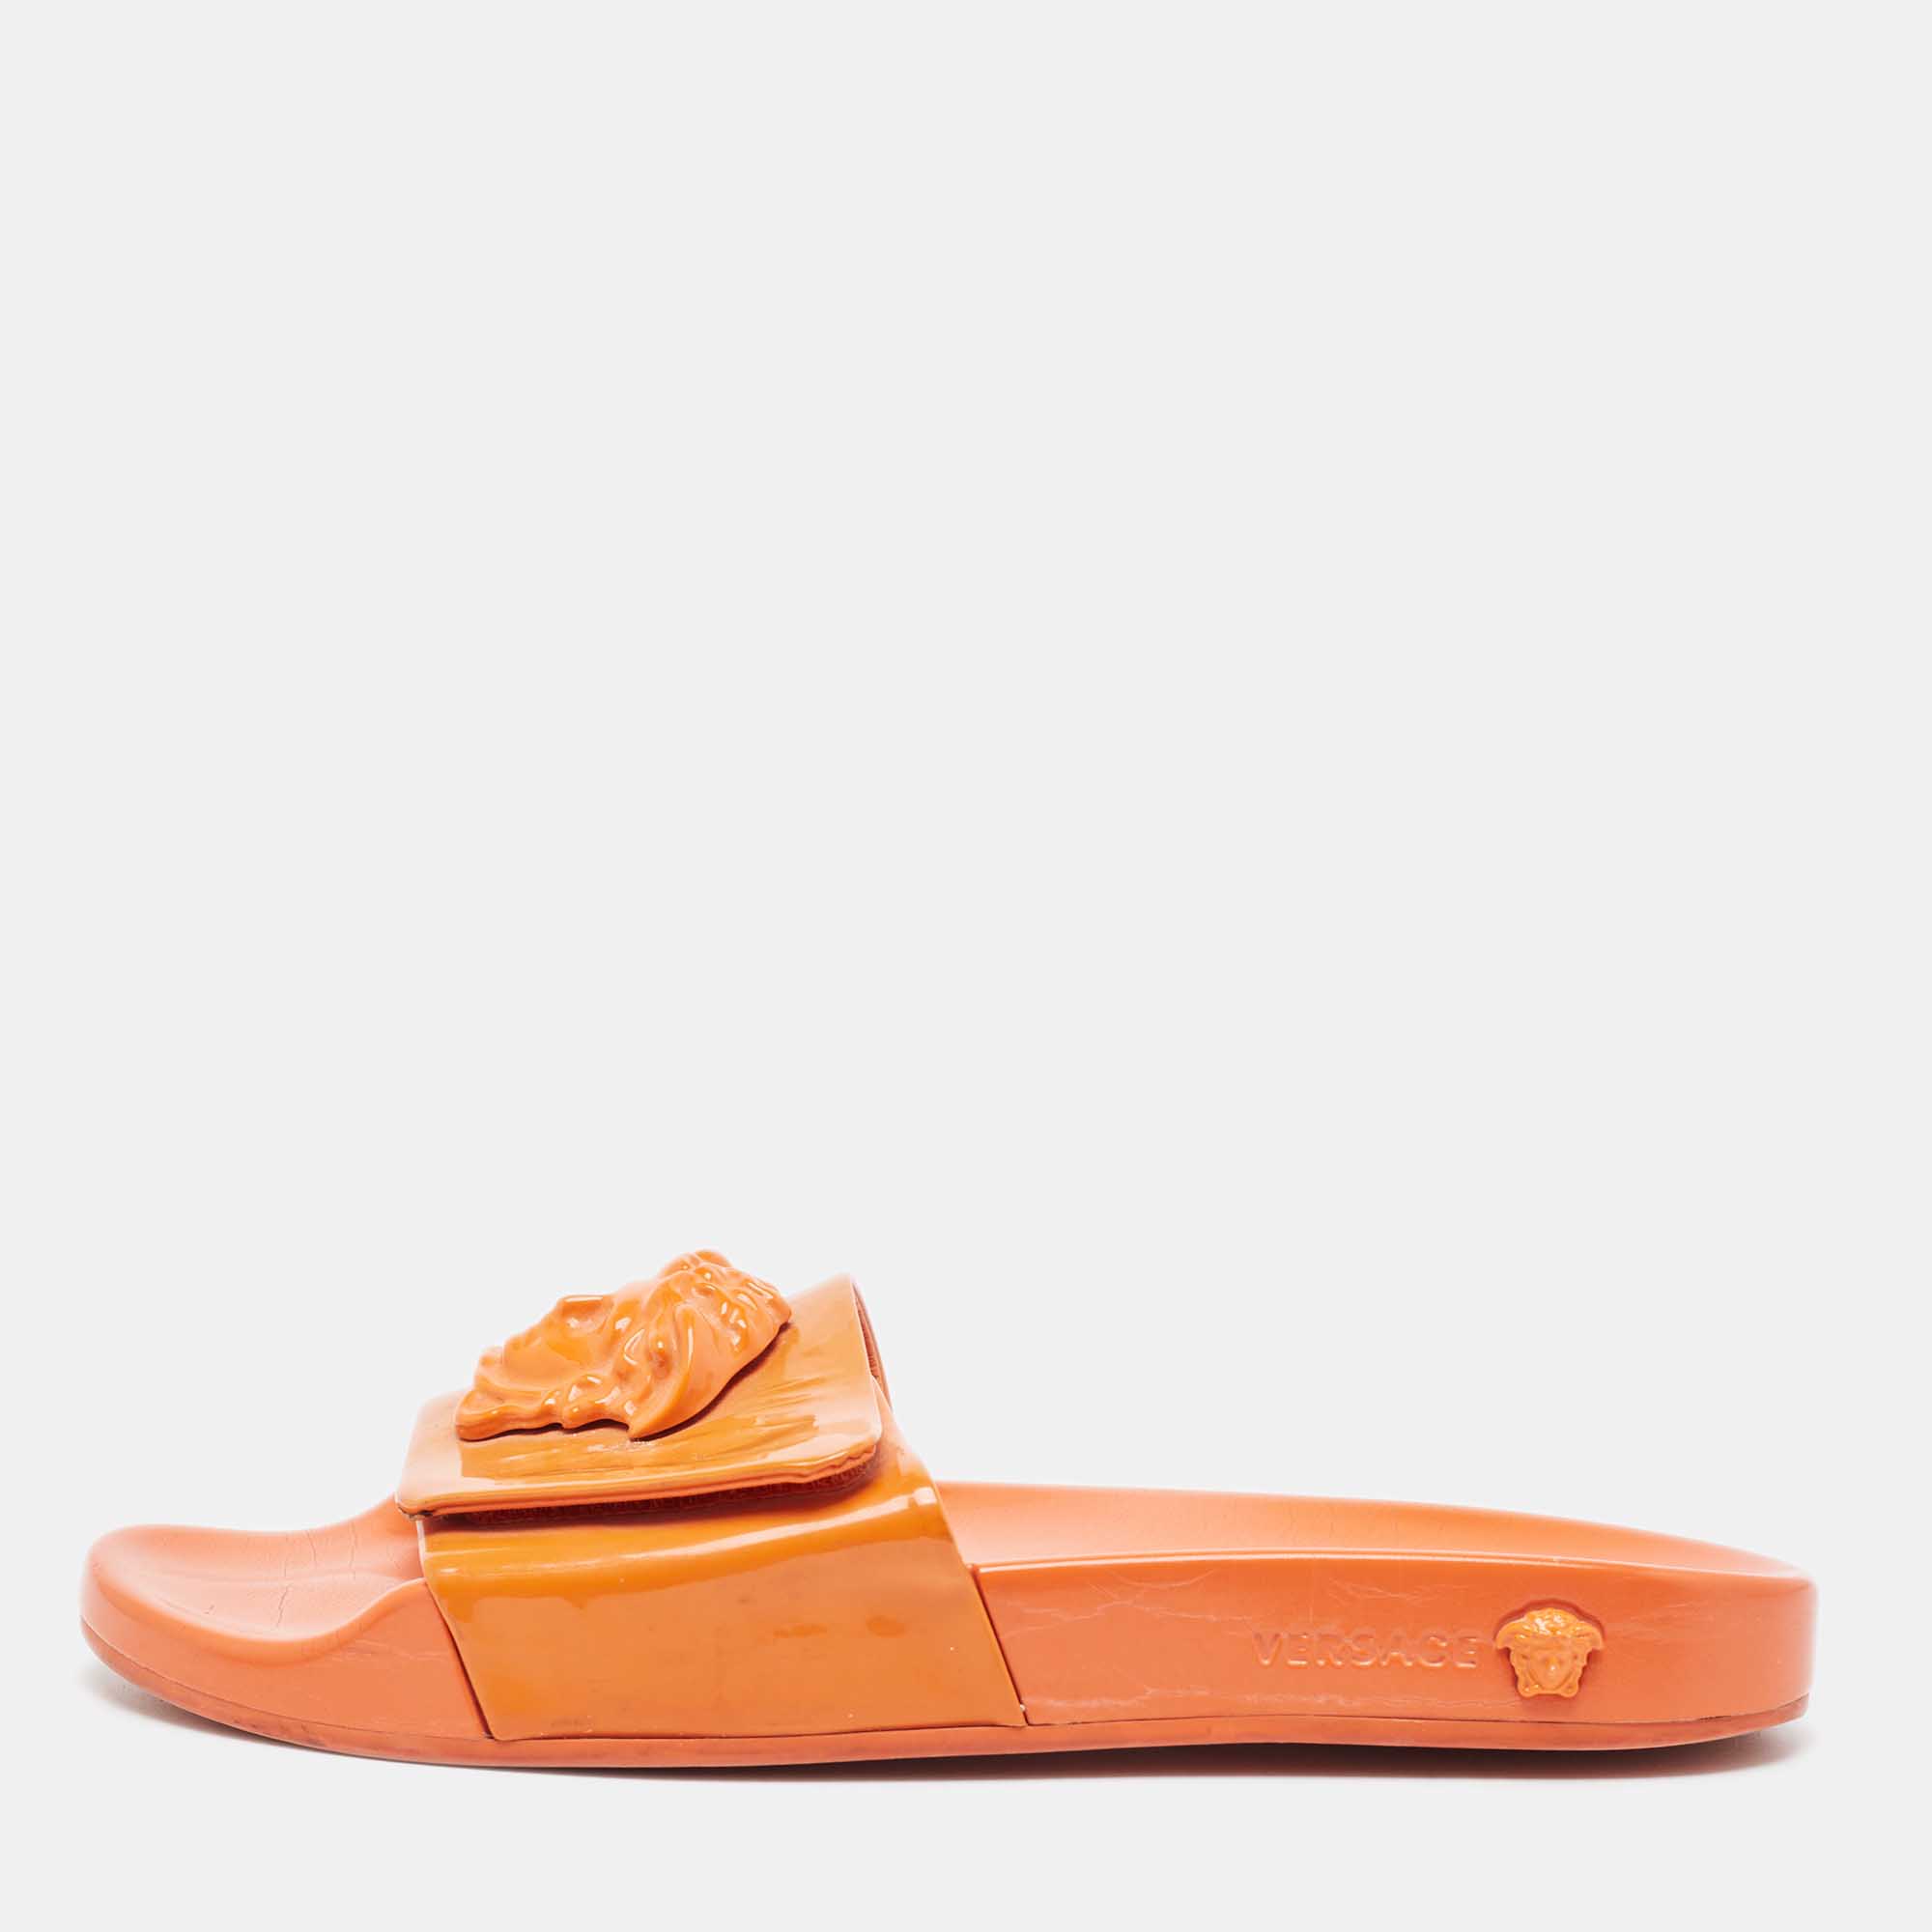 Versace orange patent leather medusa flat slides size 41